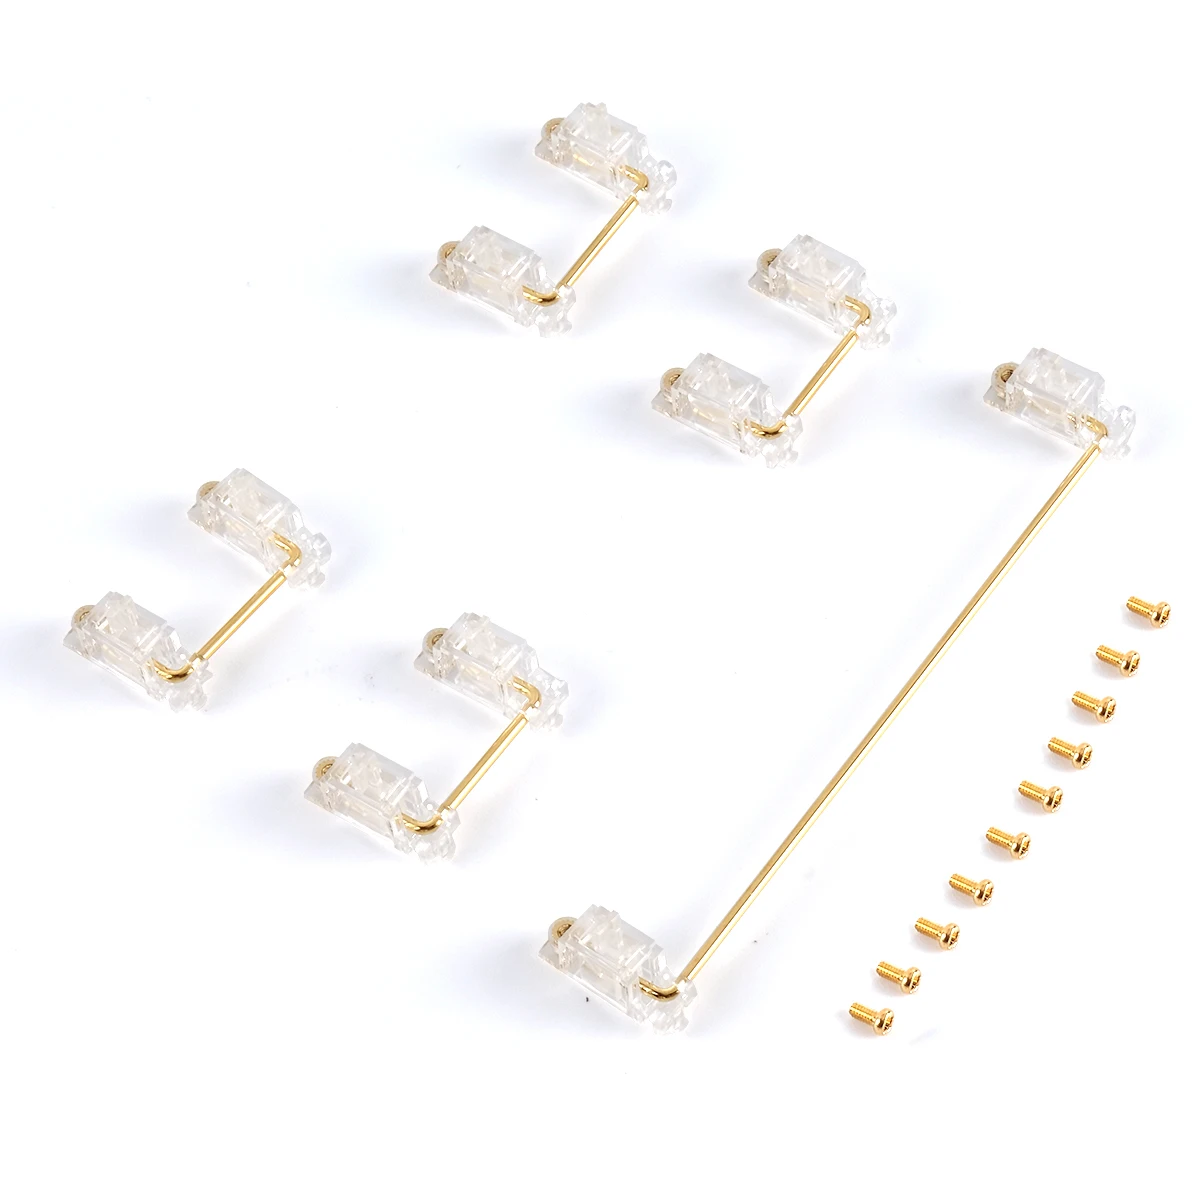 Gold Plated PCB Screw in Stabilizers Mechanical Keyboard Stabilizers Translucent 2U 6.25U (1600352525355)